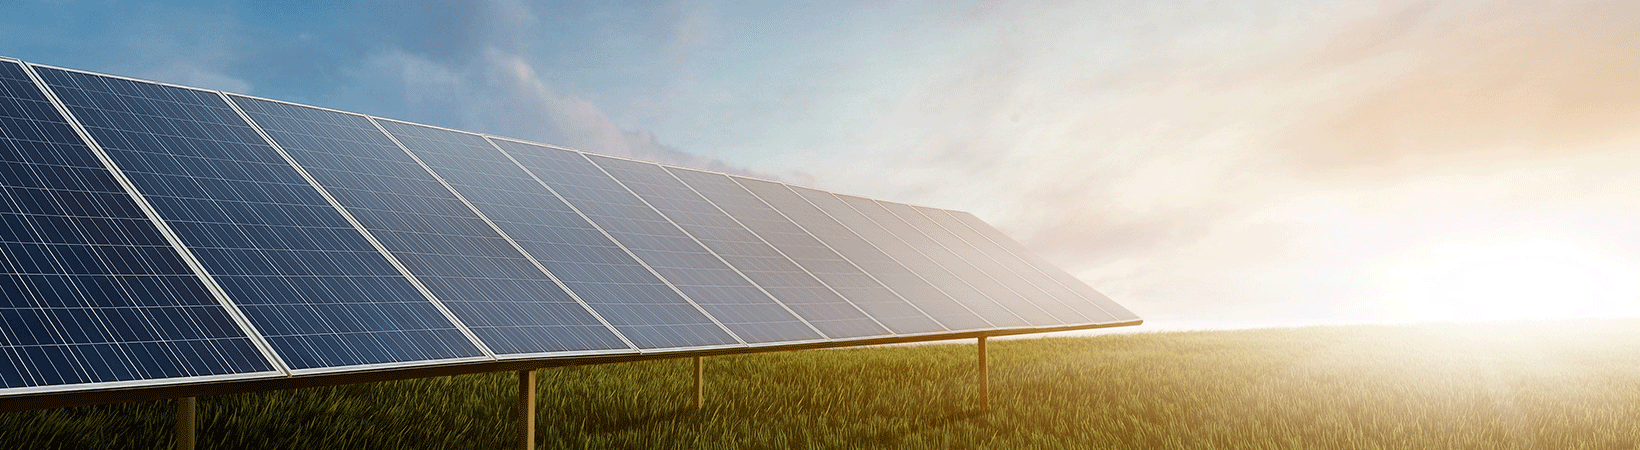 Agriculture solar installation